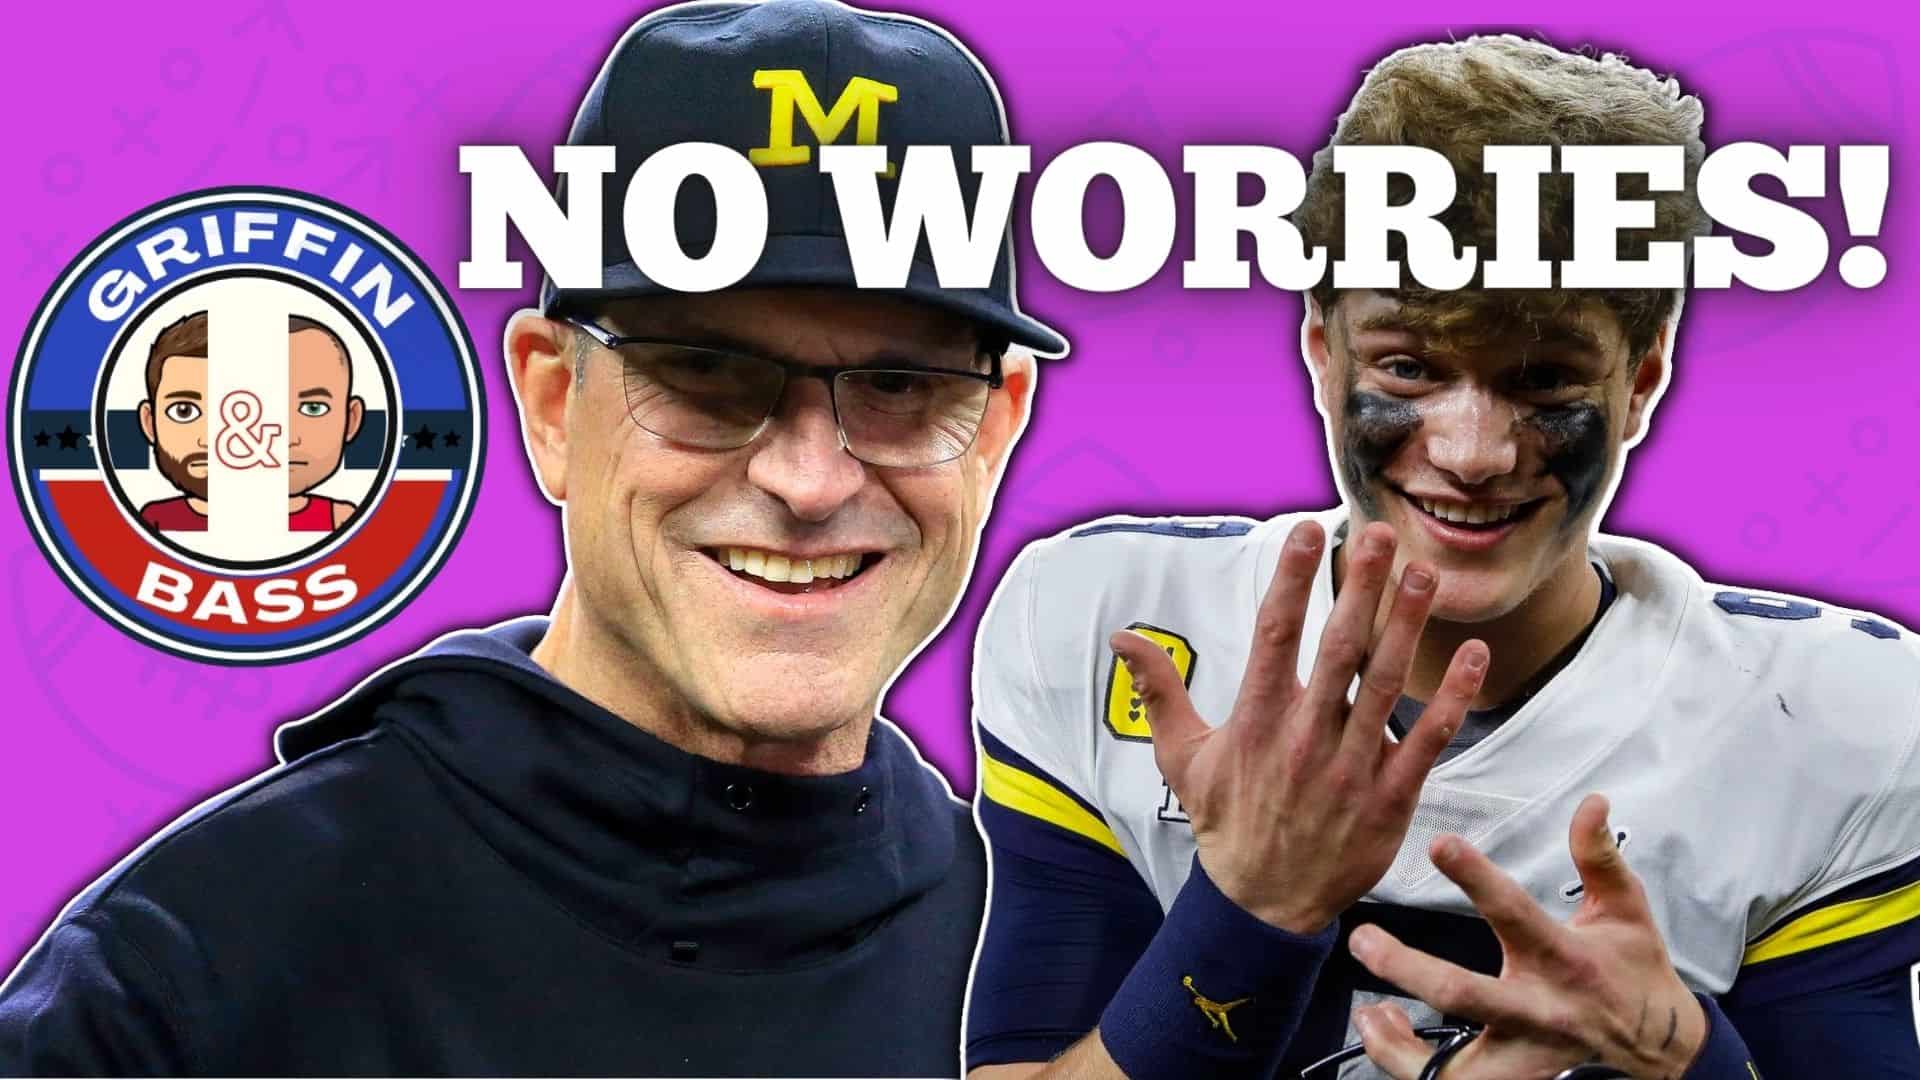 University of Michigan vs UConn Should be No Contest